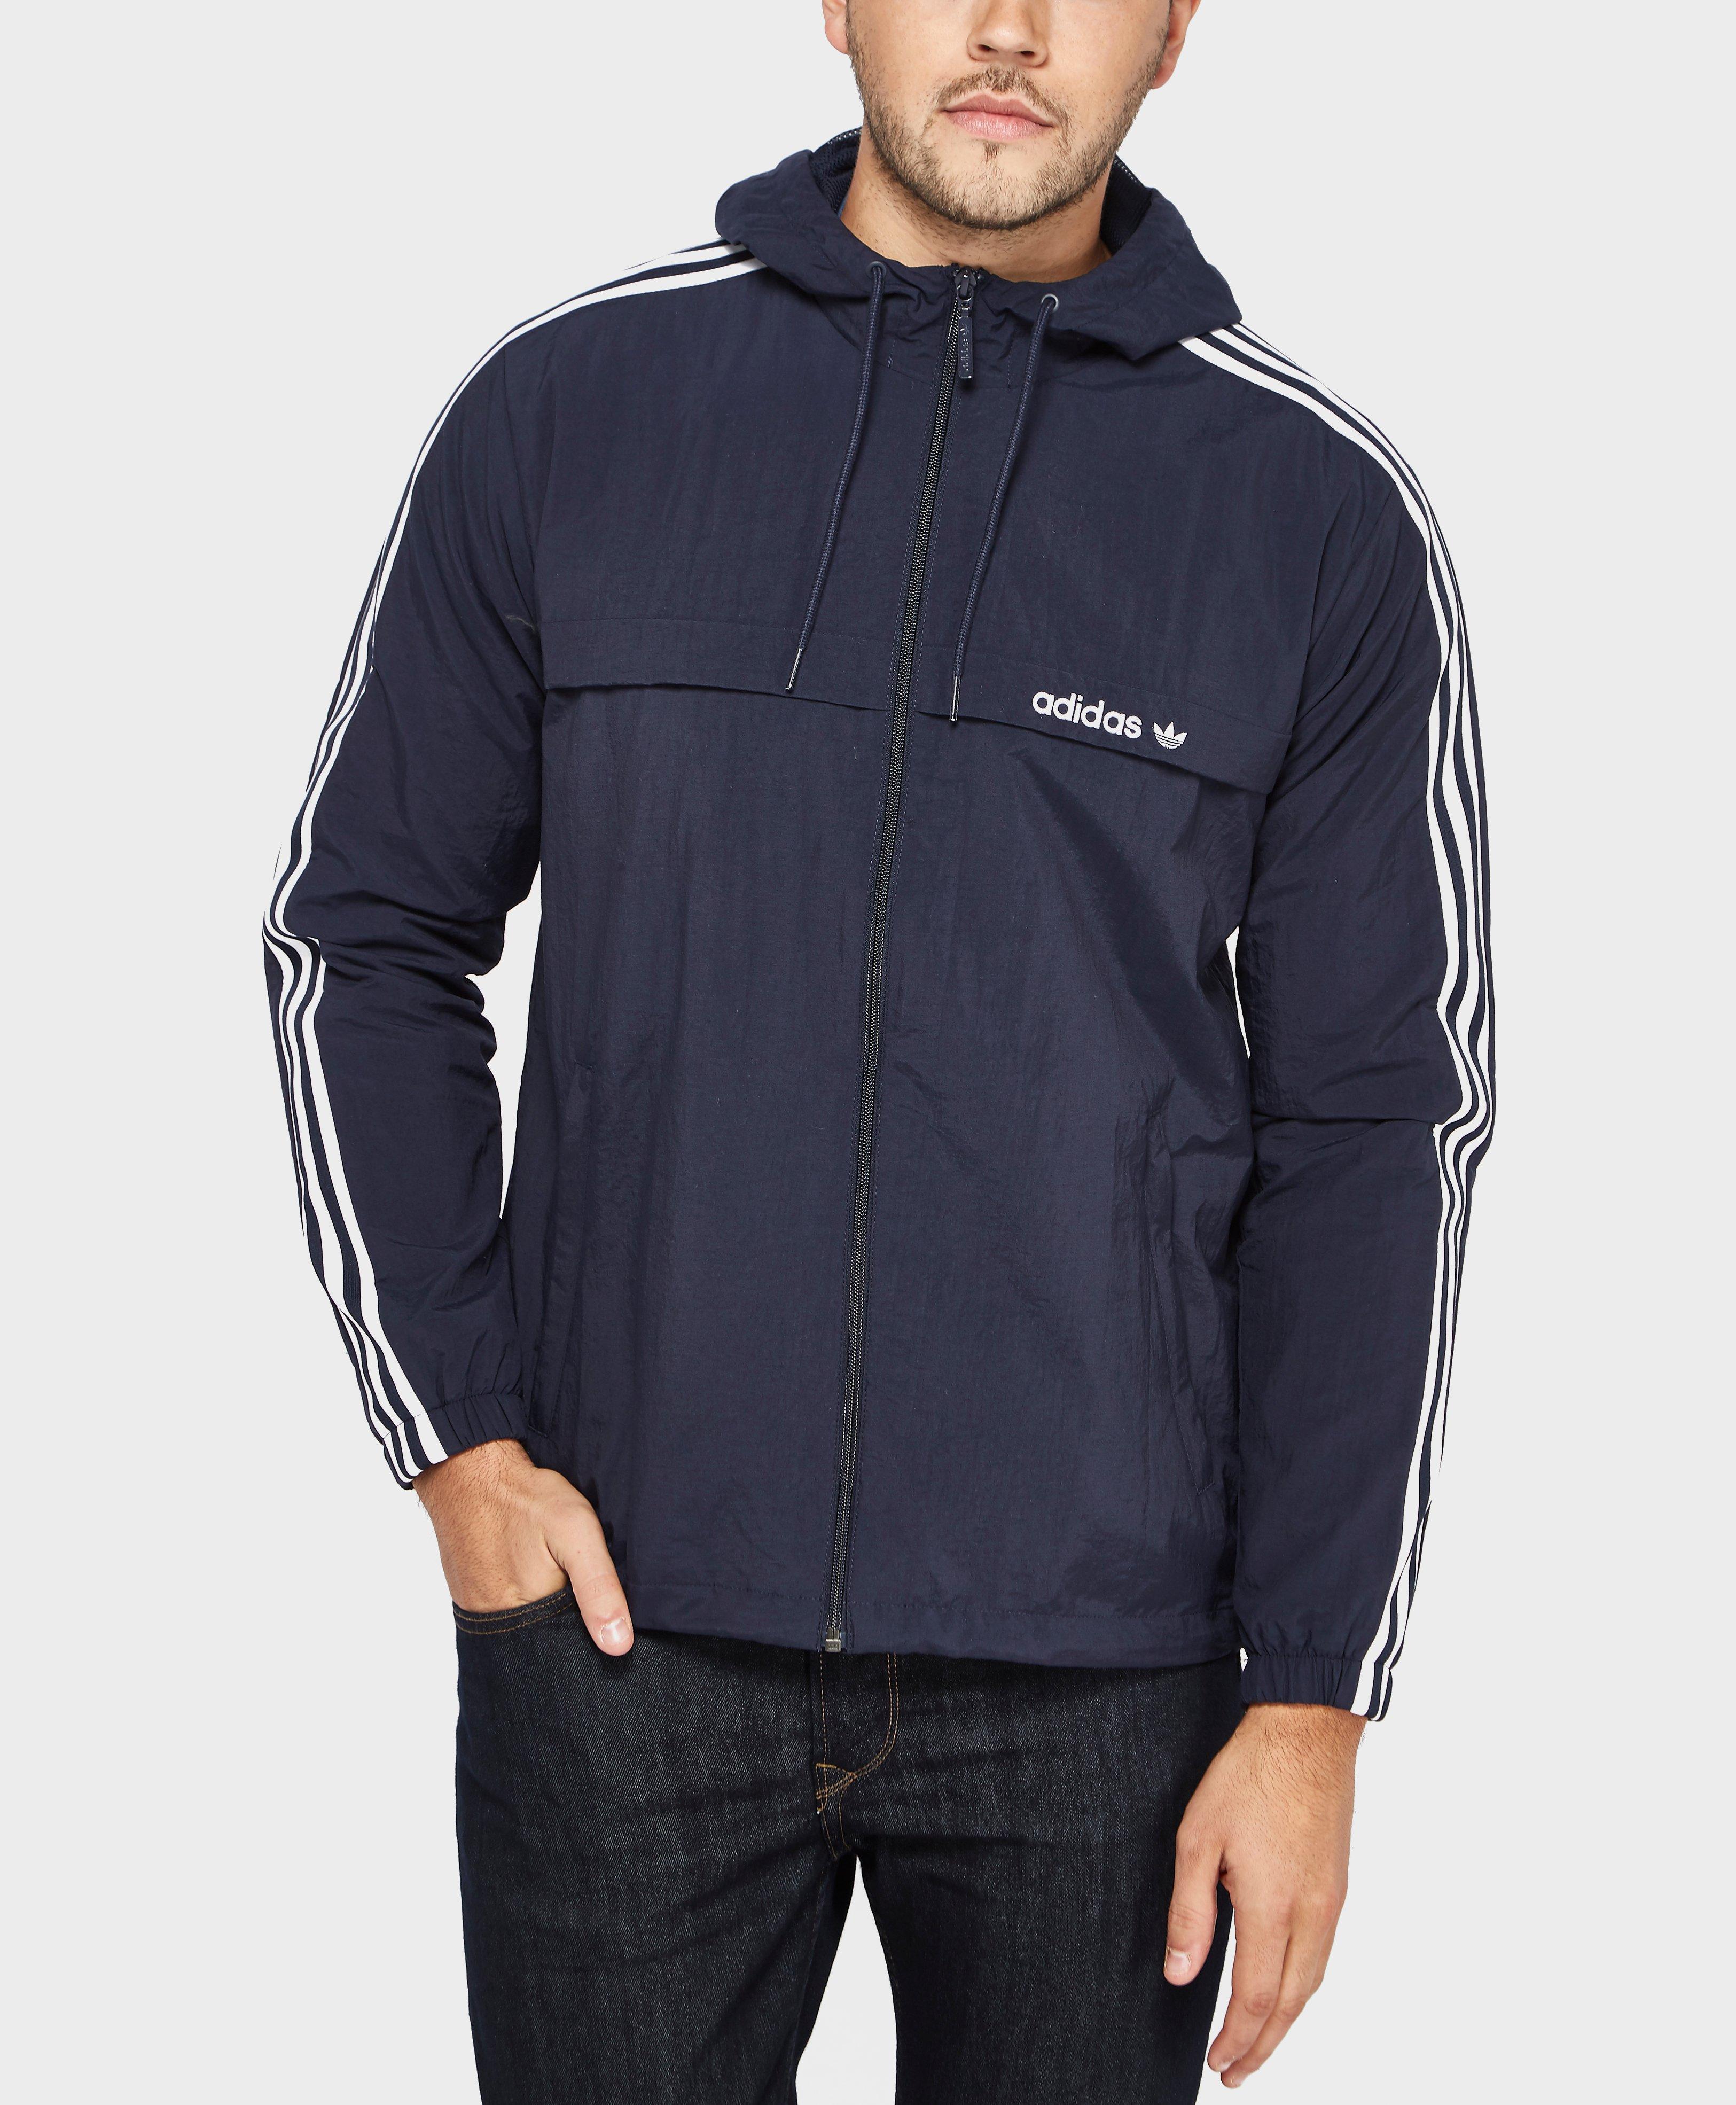 Lyst - Adidas Originals 3 Stripe Jacket in Blue for Men